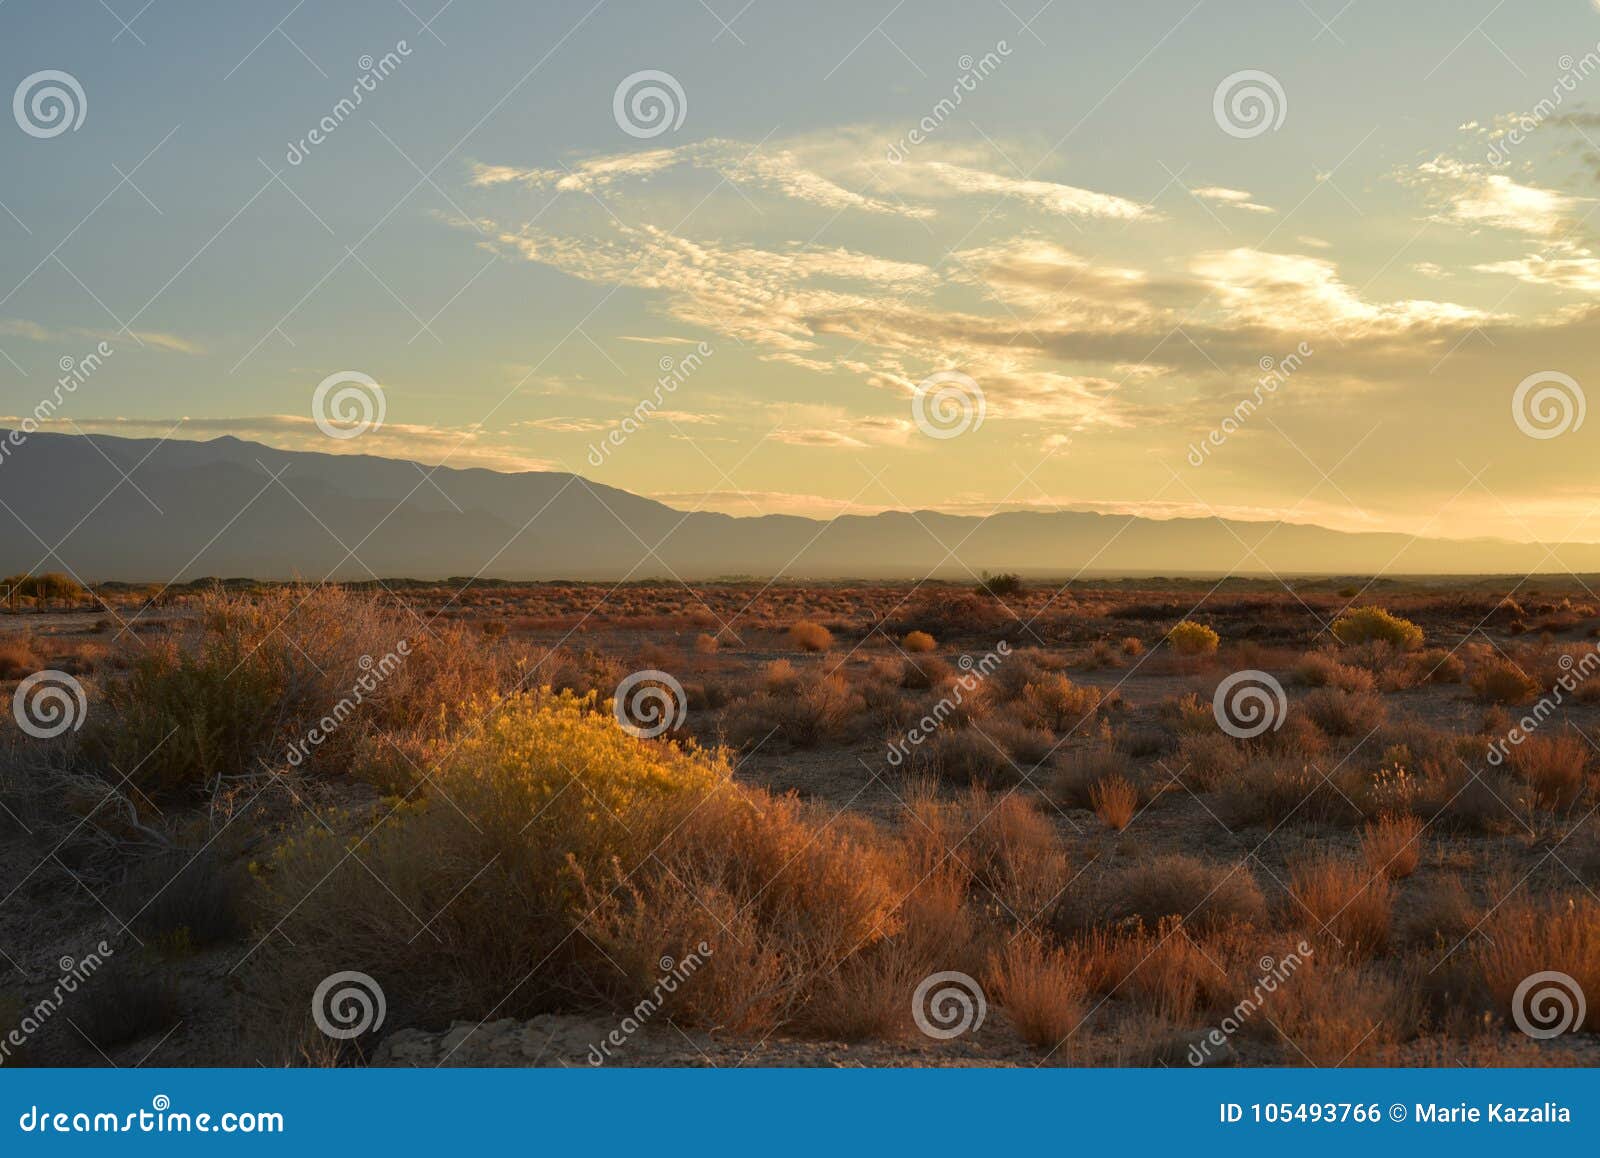 mojave desert dawn landscape sky clouds mountain range c